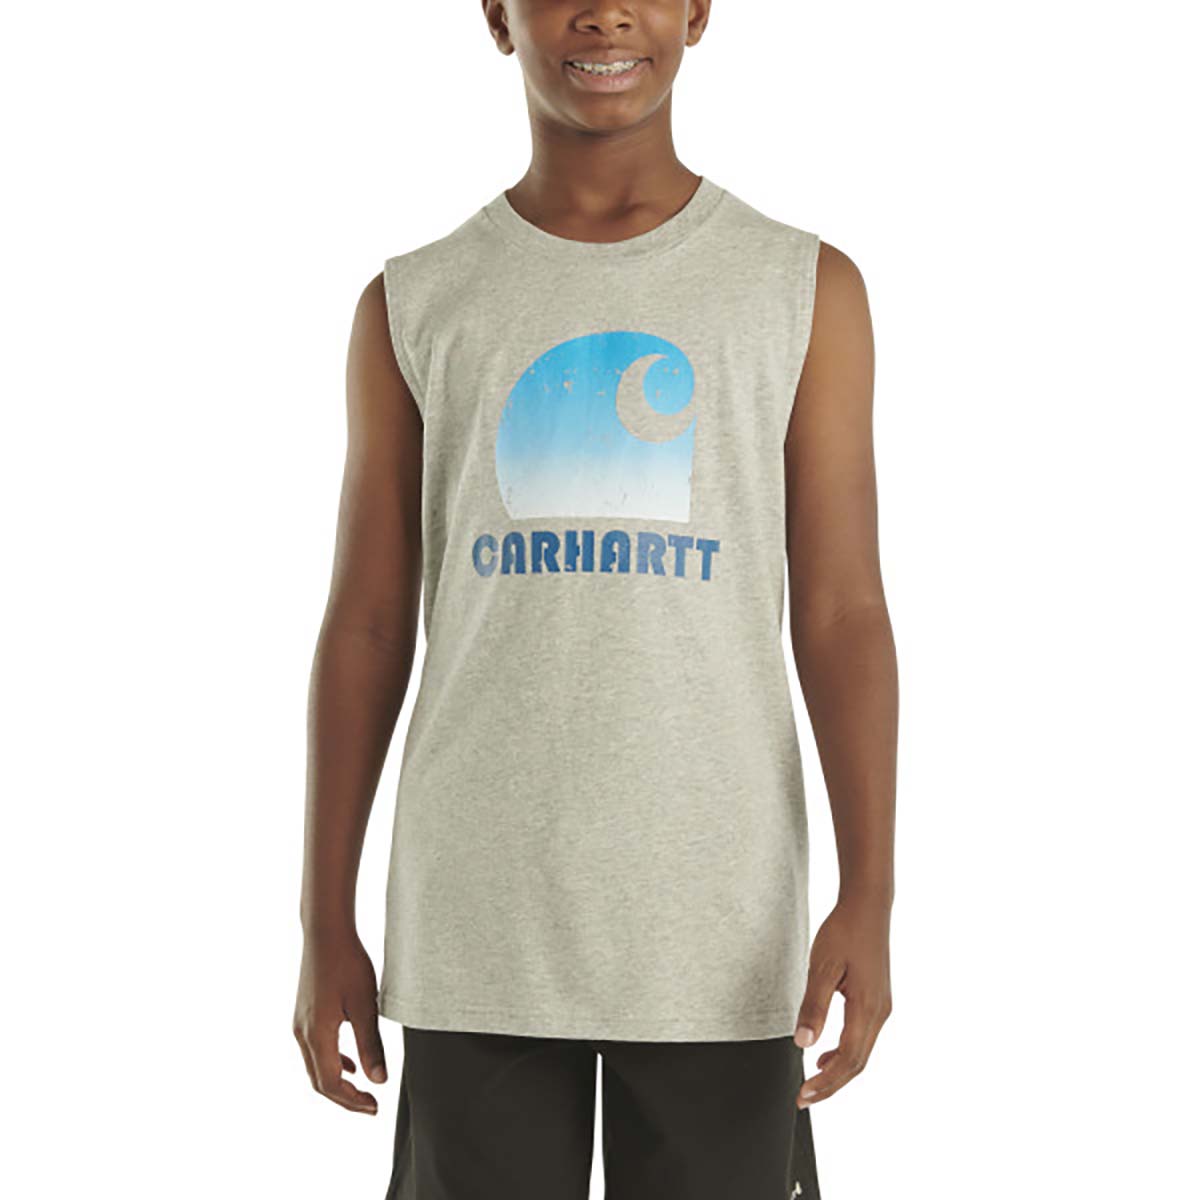 Carhartt Boys' Sleeveless Carhartt Logo T-Shirt